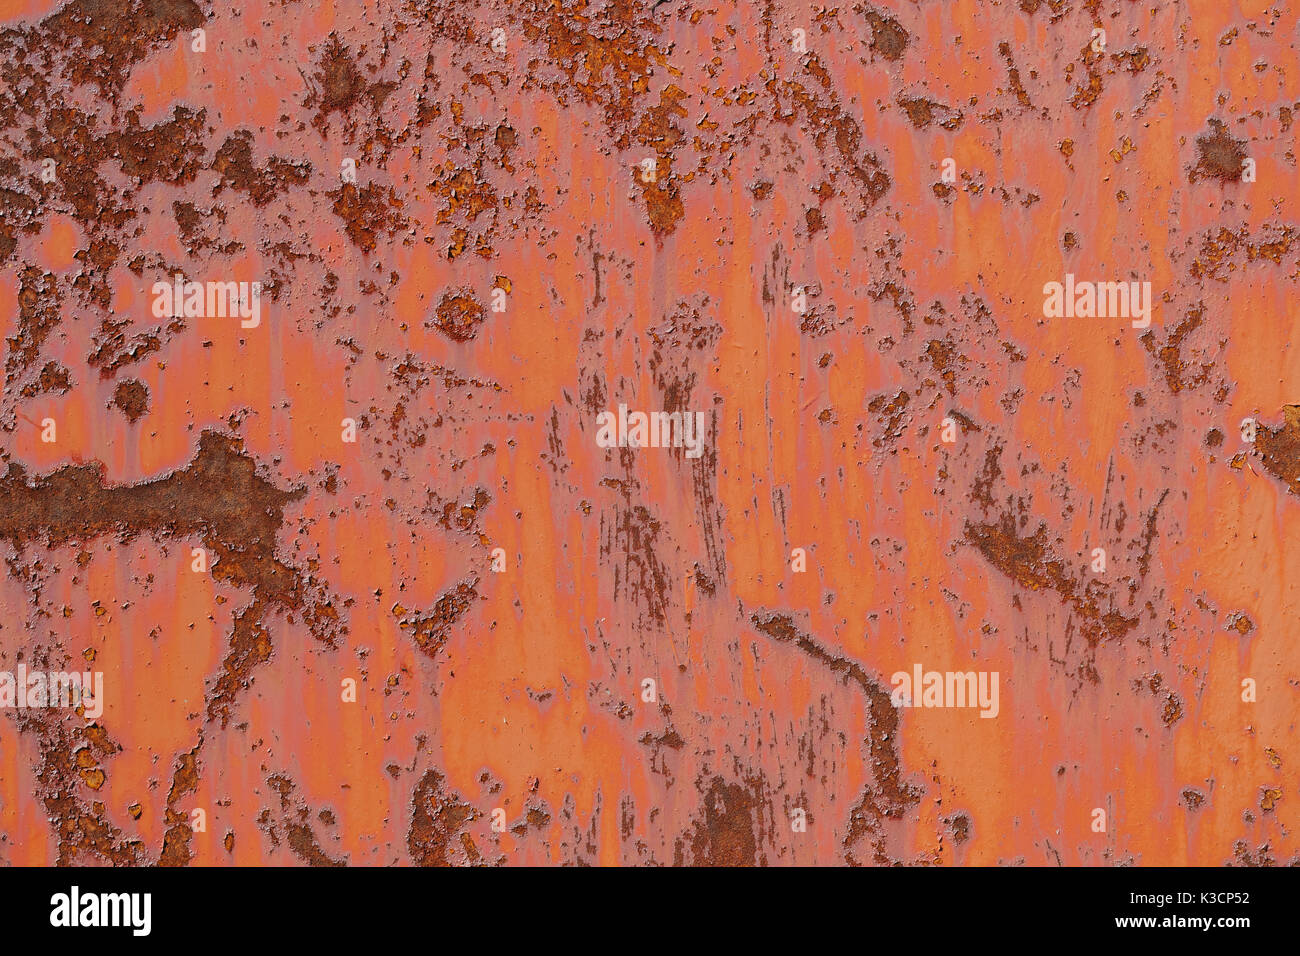 Resumen corroído metal oxidado colorido telón de fondo. Foto de stock